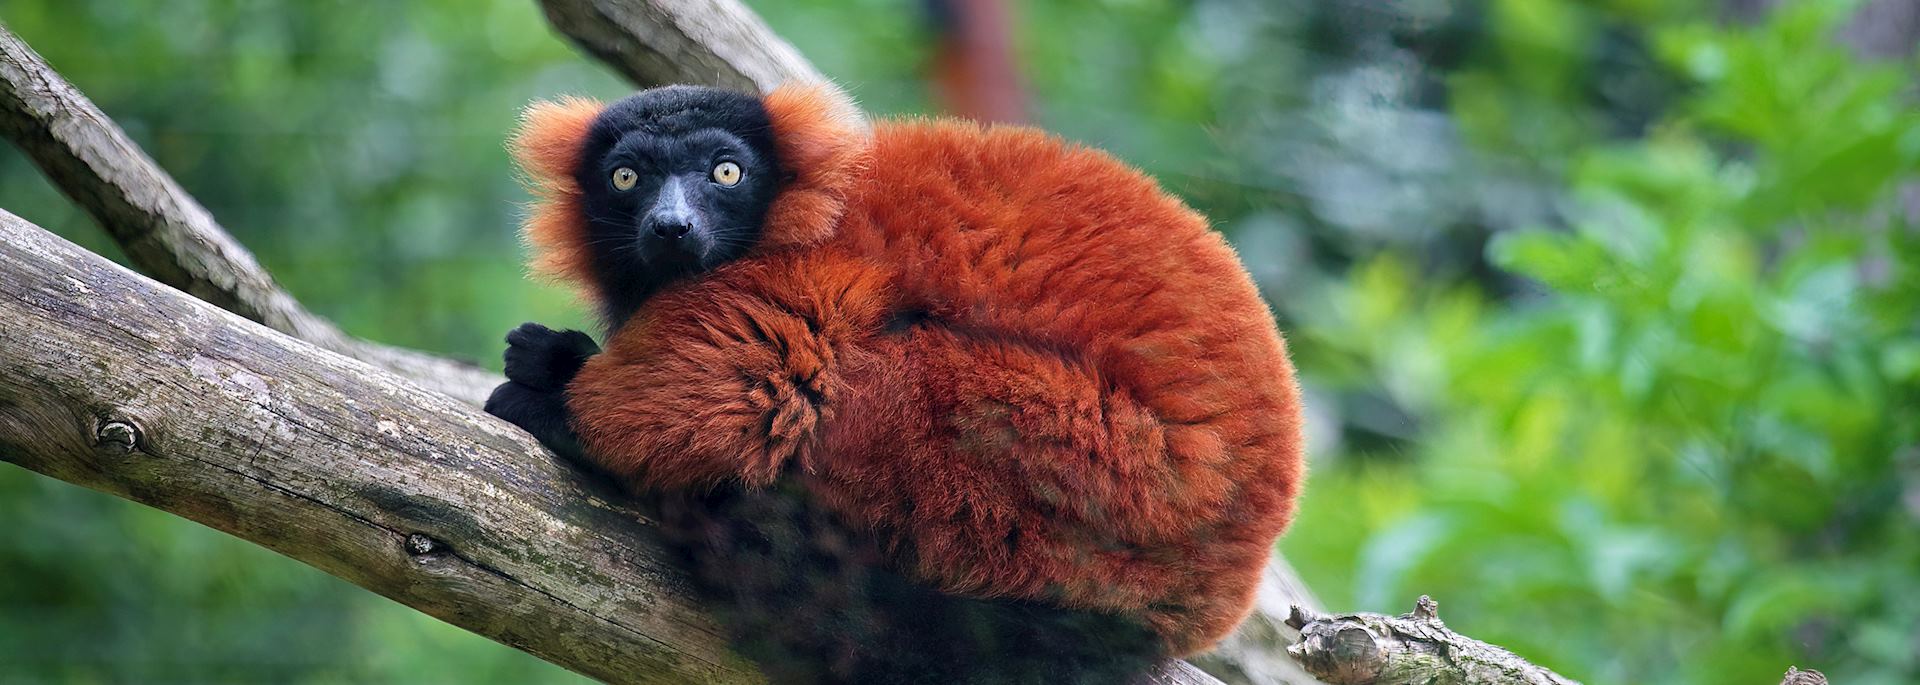 Red ruffed lemur, Madagascar